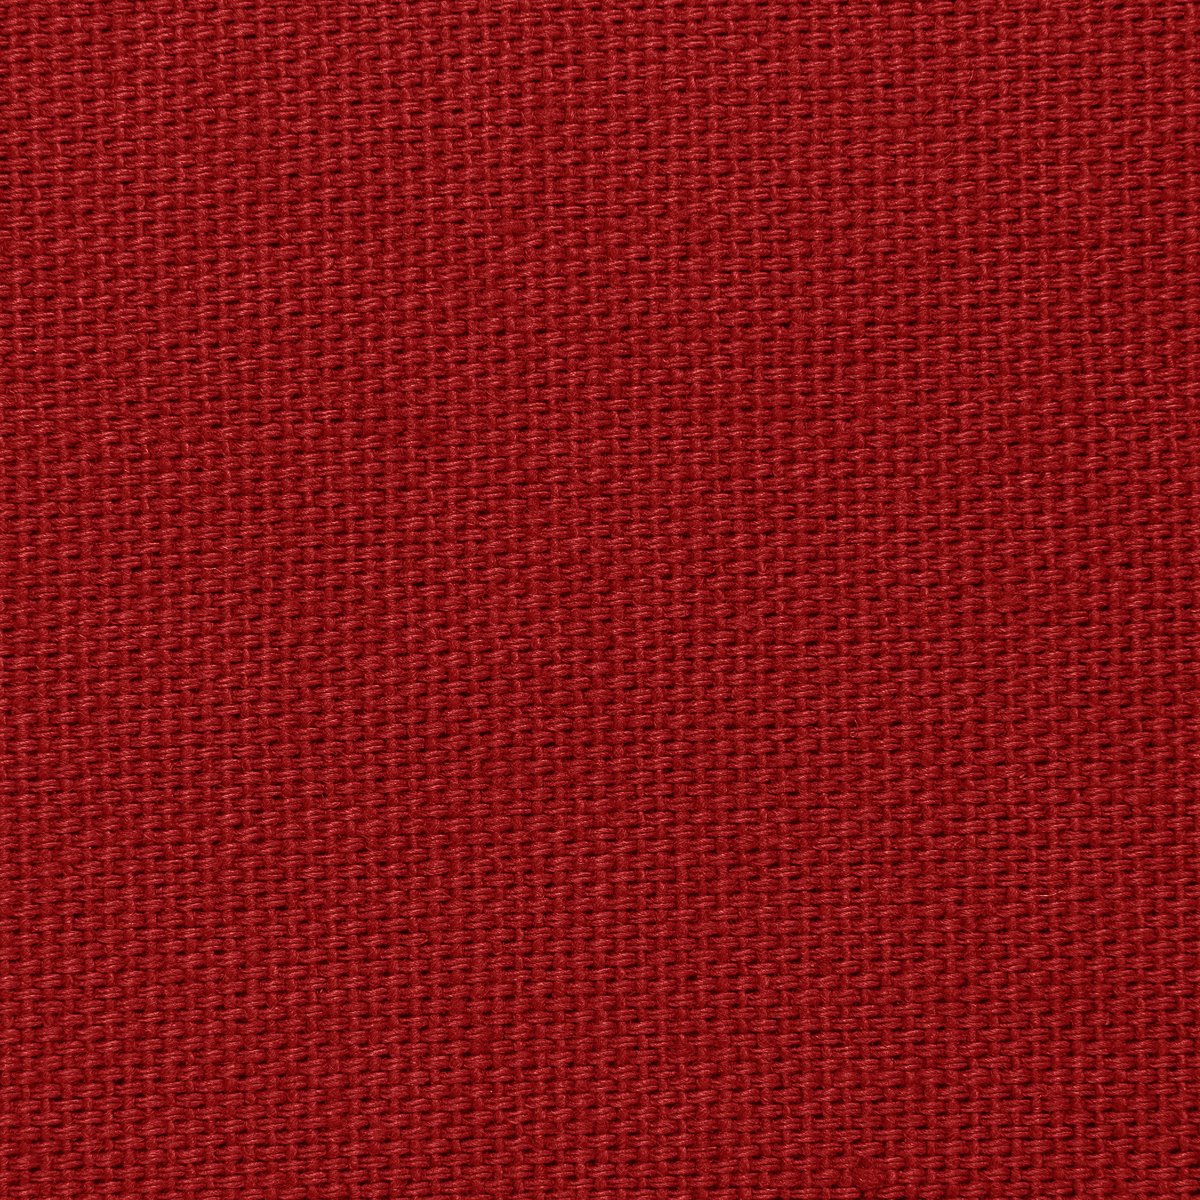 Komplettkissen Baumwolle Canvas-Bordeaux Rot / 40x60 cm